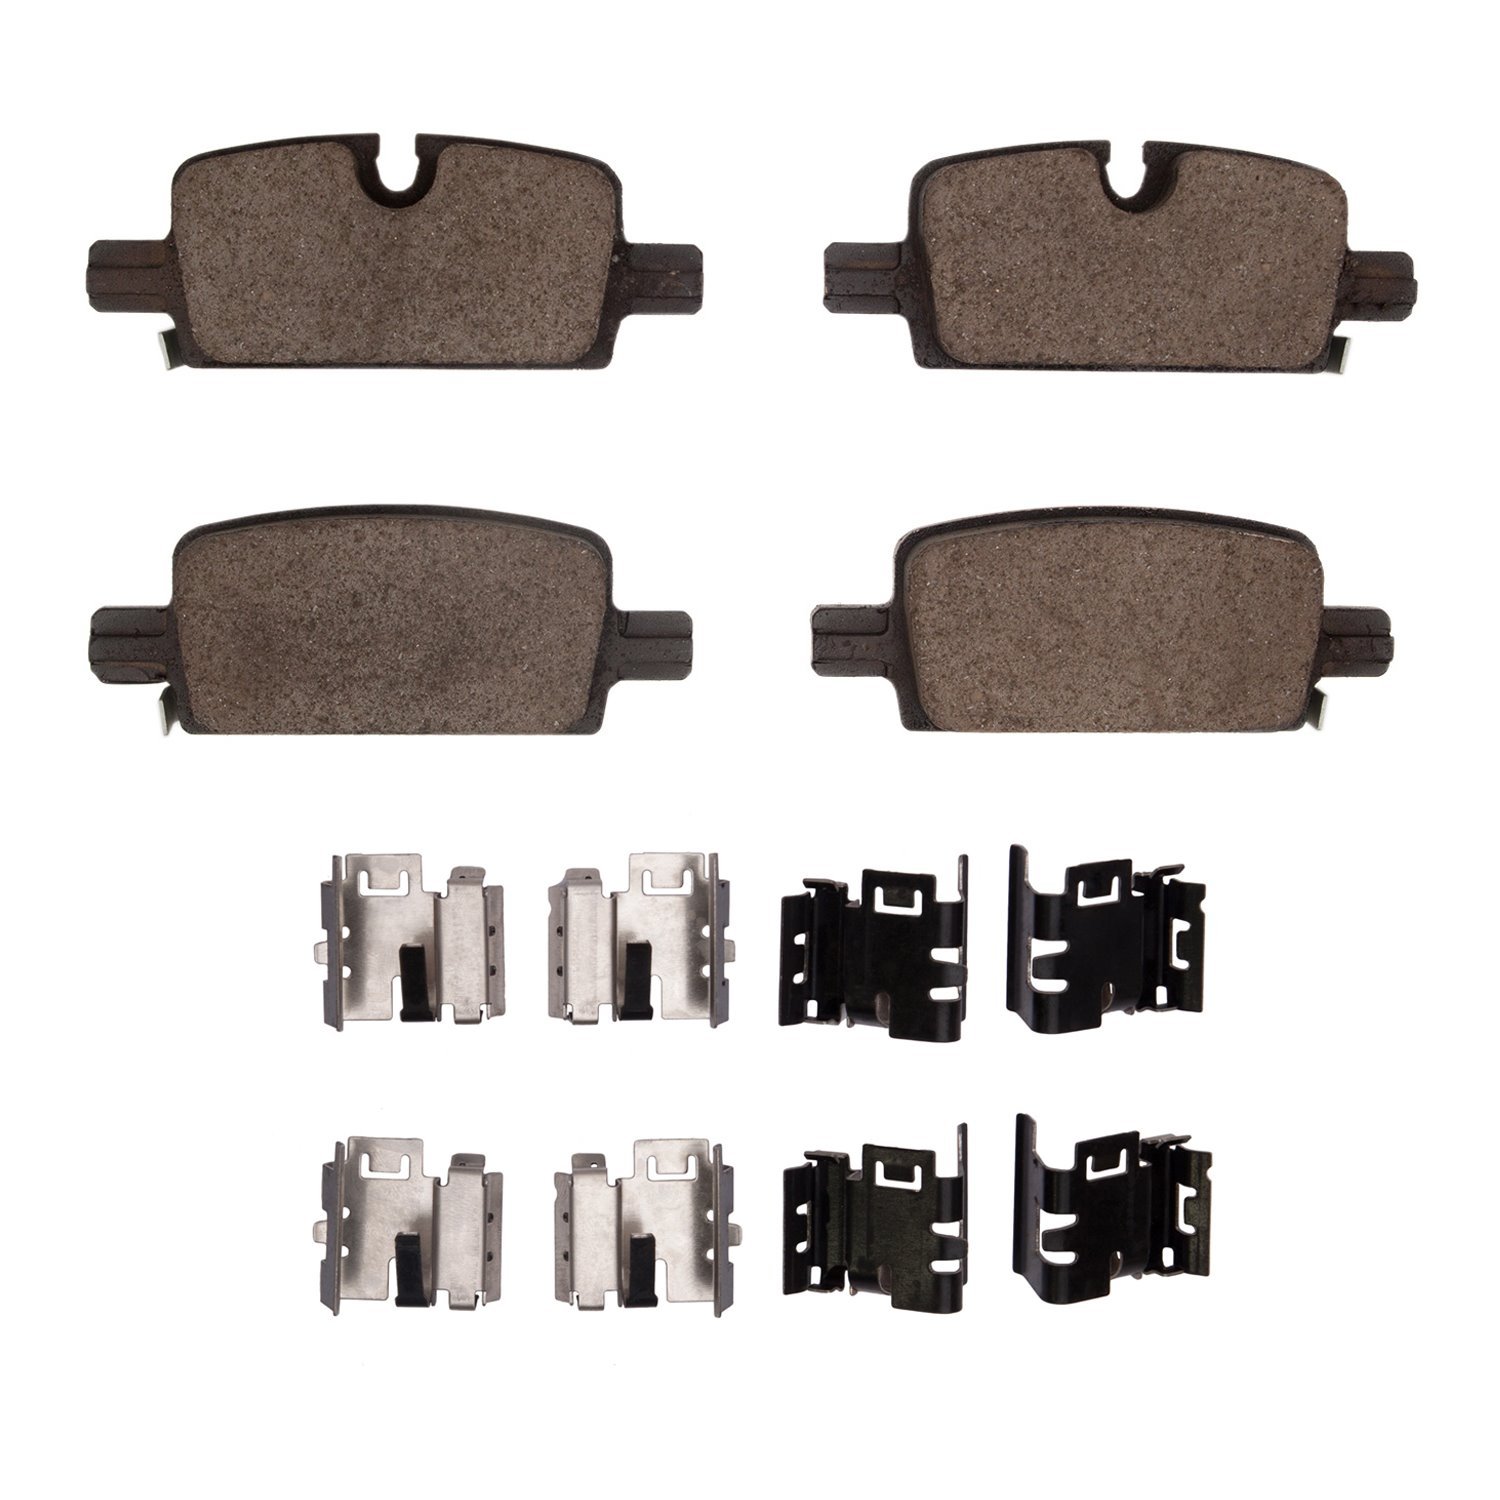 1310-2174-01 3000-Series Ceramic Brake Pads & Hardware Kit, Fits Select Multiple Makes/Models, Position: Rear,Rr